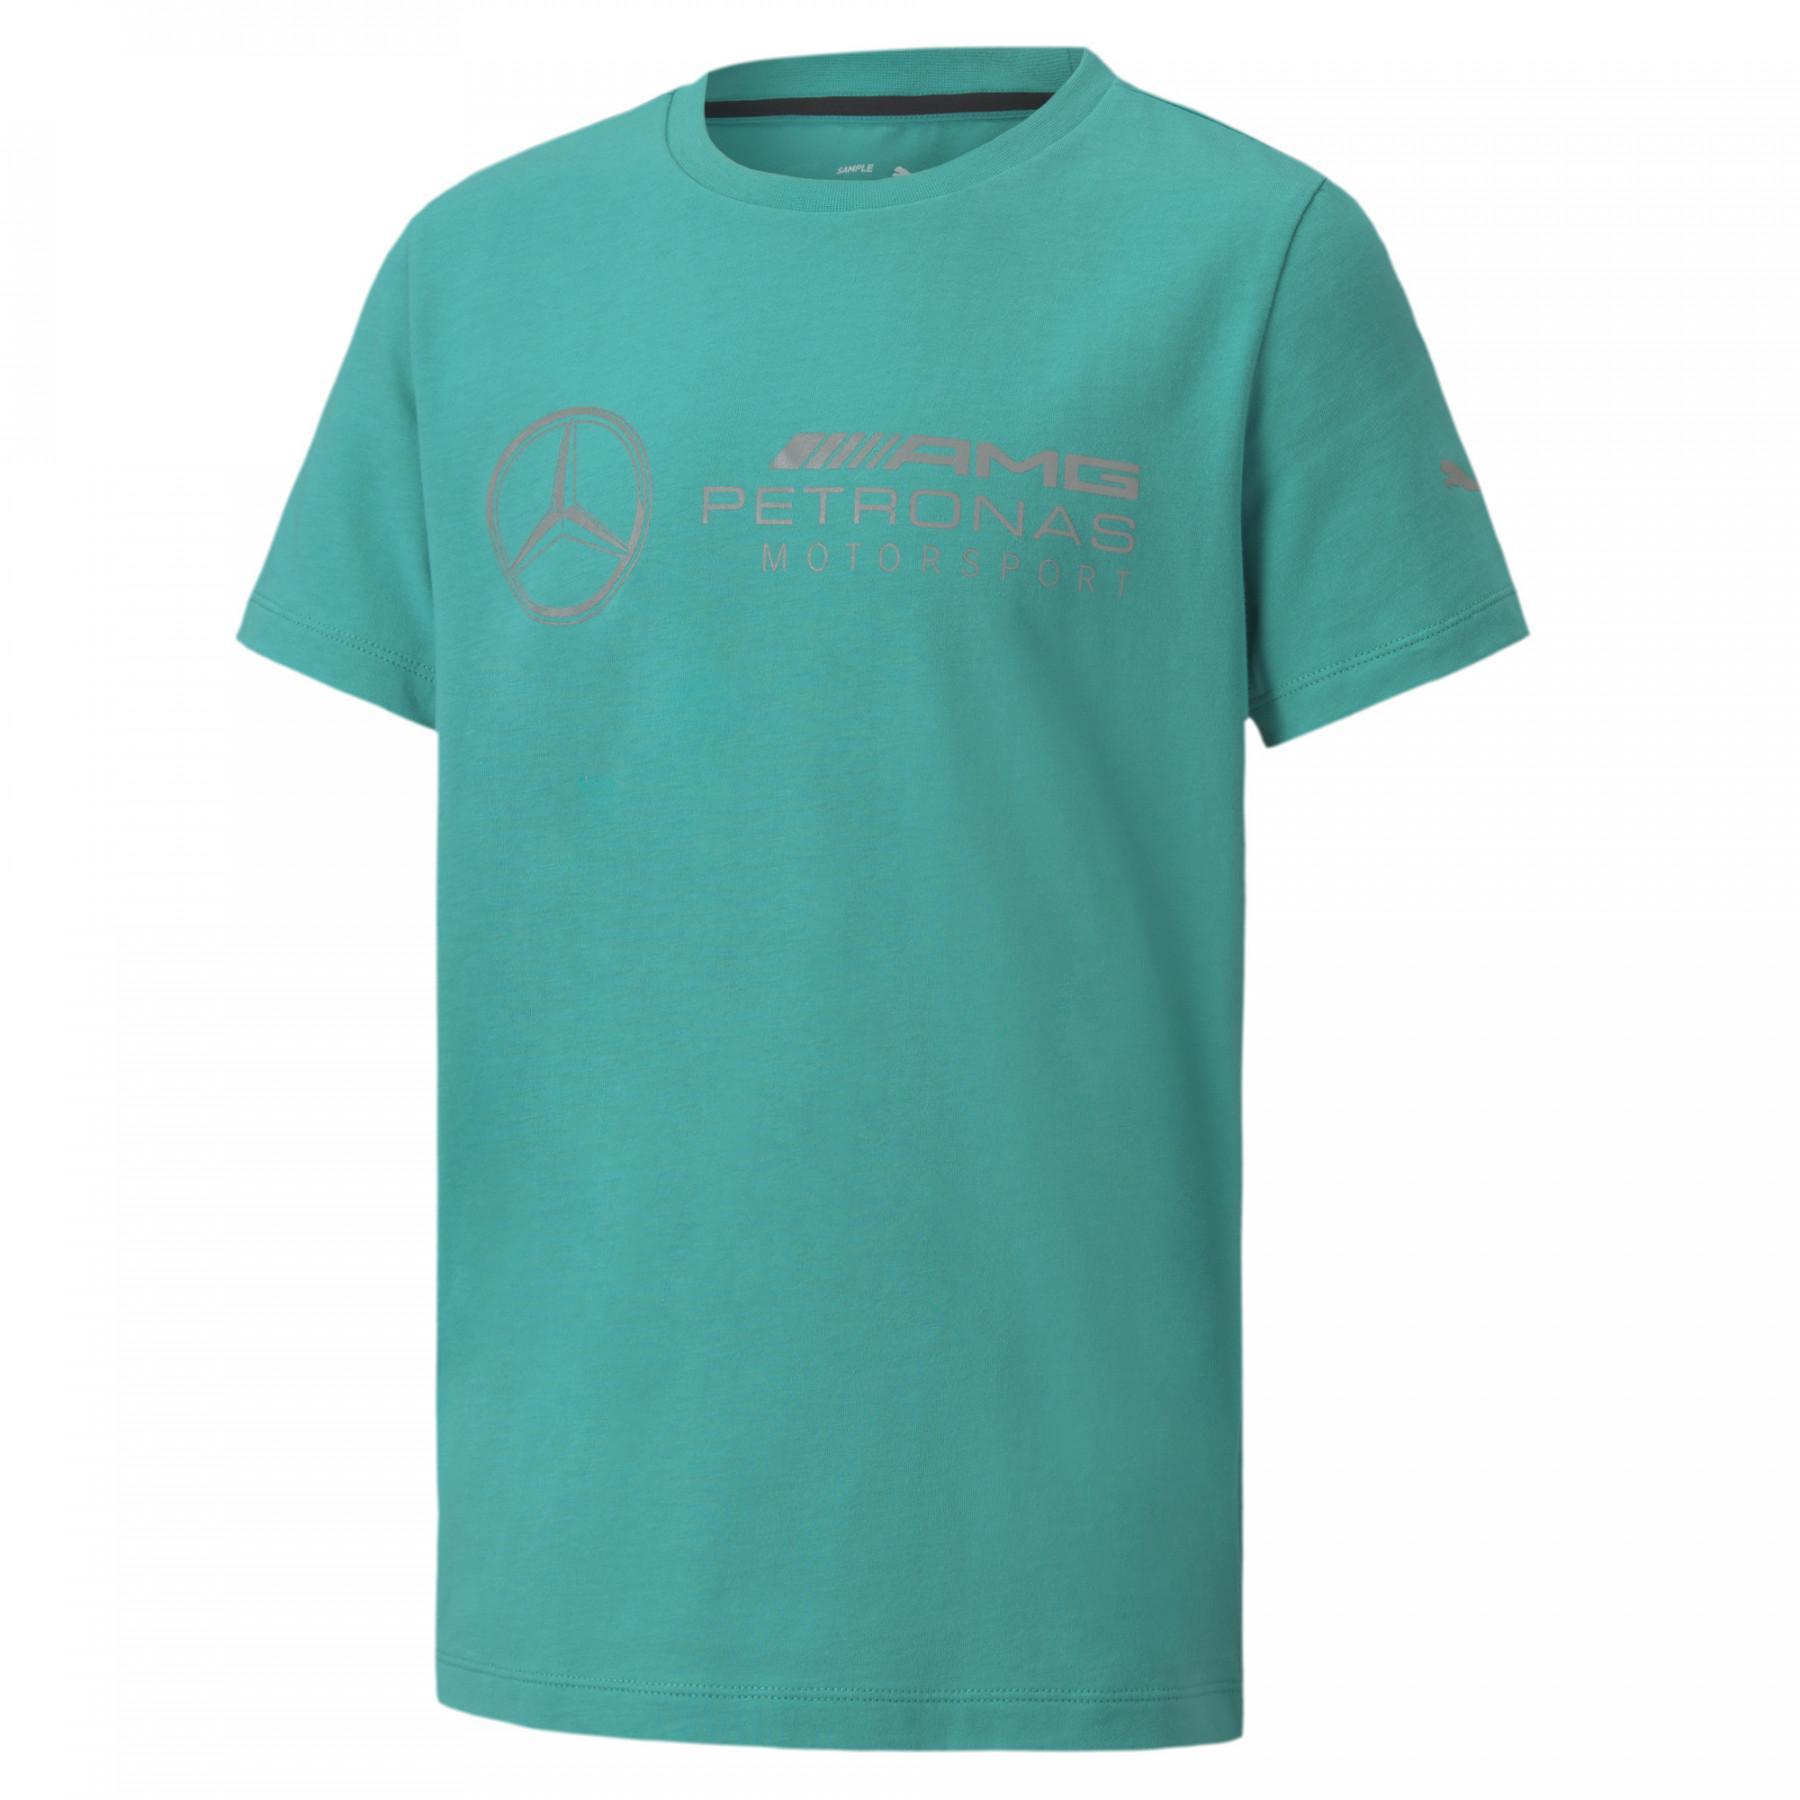 mercedes-amg petronas child t-shirt